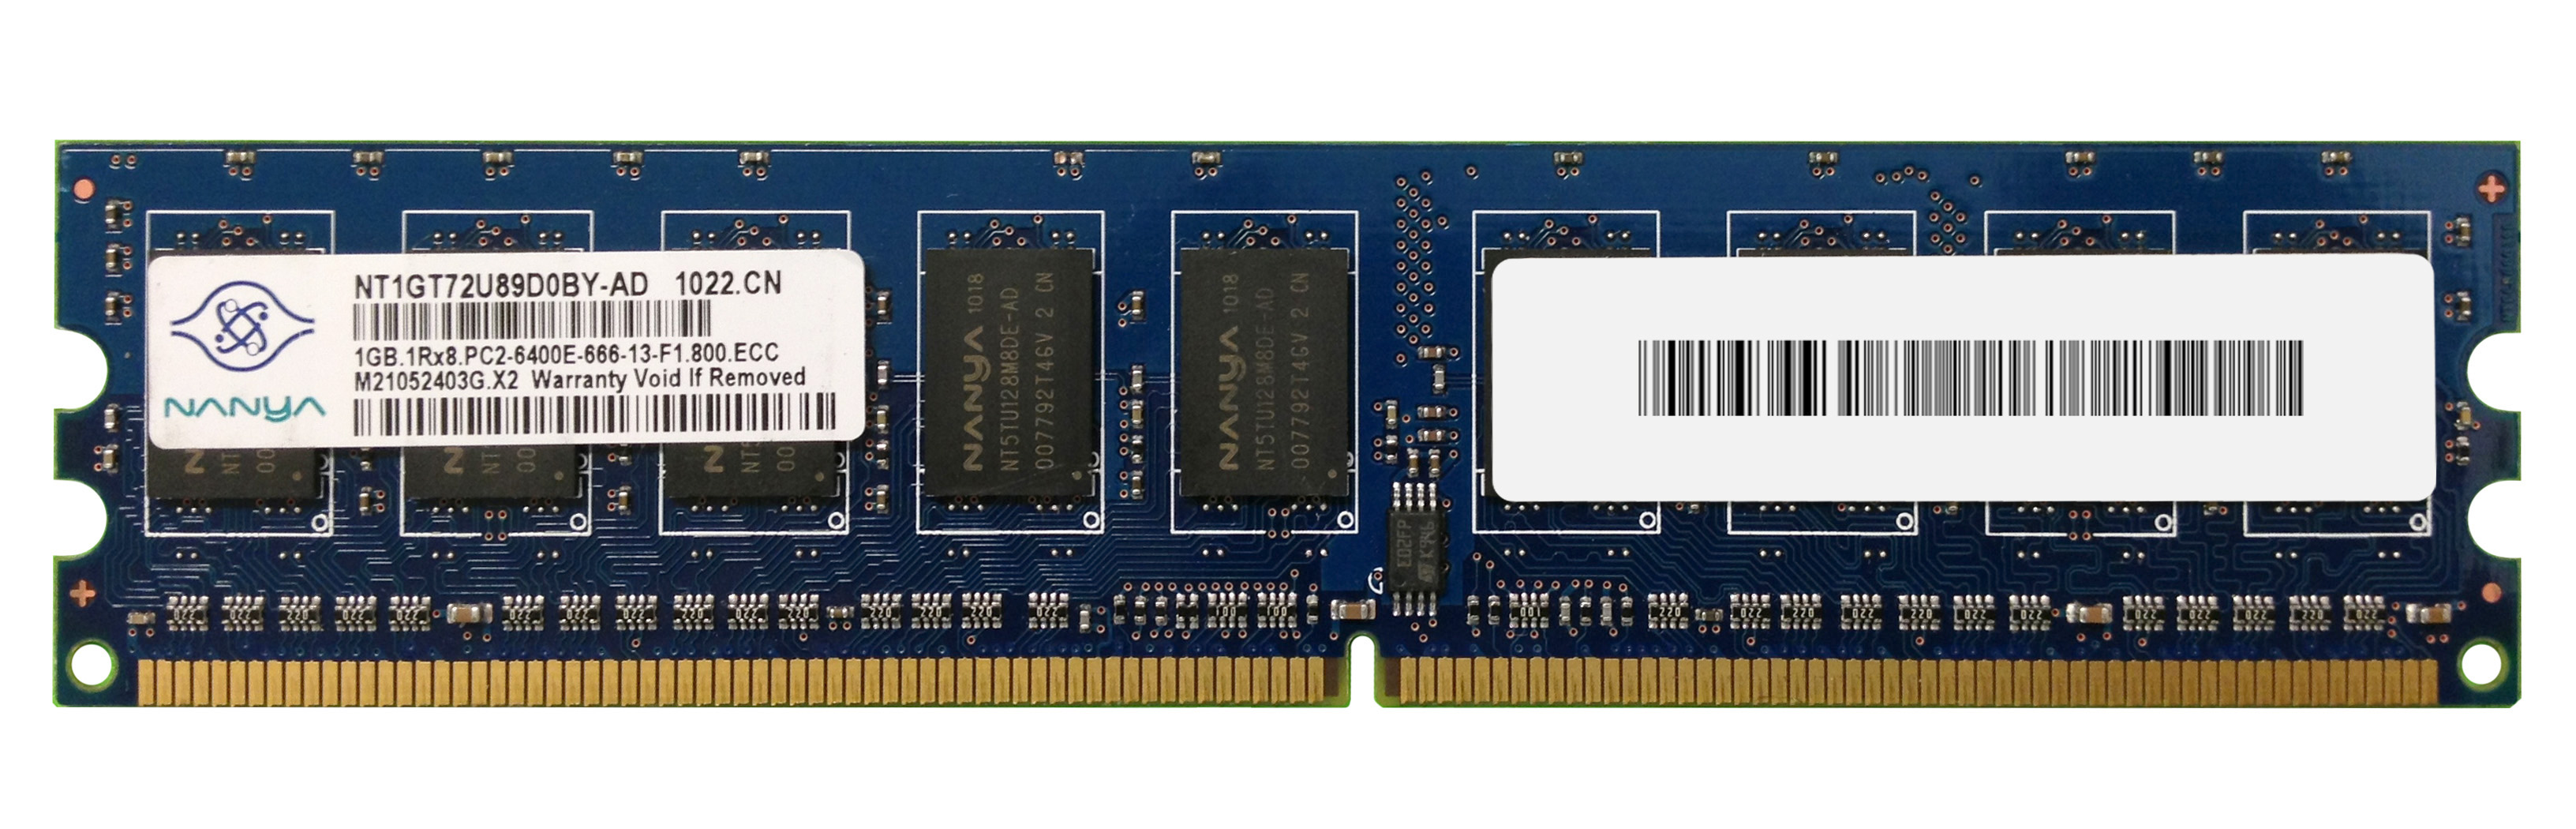 1GB PC2-6400 ECC: Nanya NT1GT72U89D0BY-AD - 1GB (1x1GB) 800Mhz PC2-6400E ECC 1.8V 240-Pin Server Ram Memory